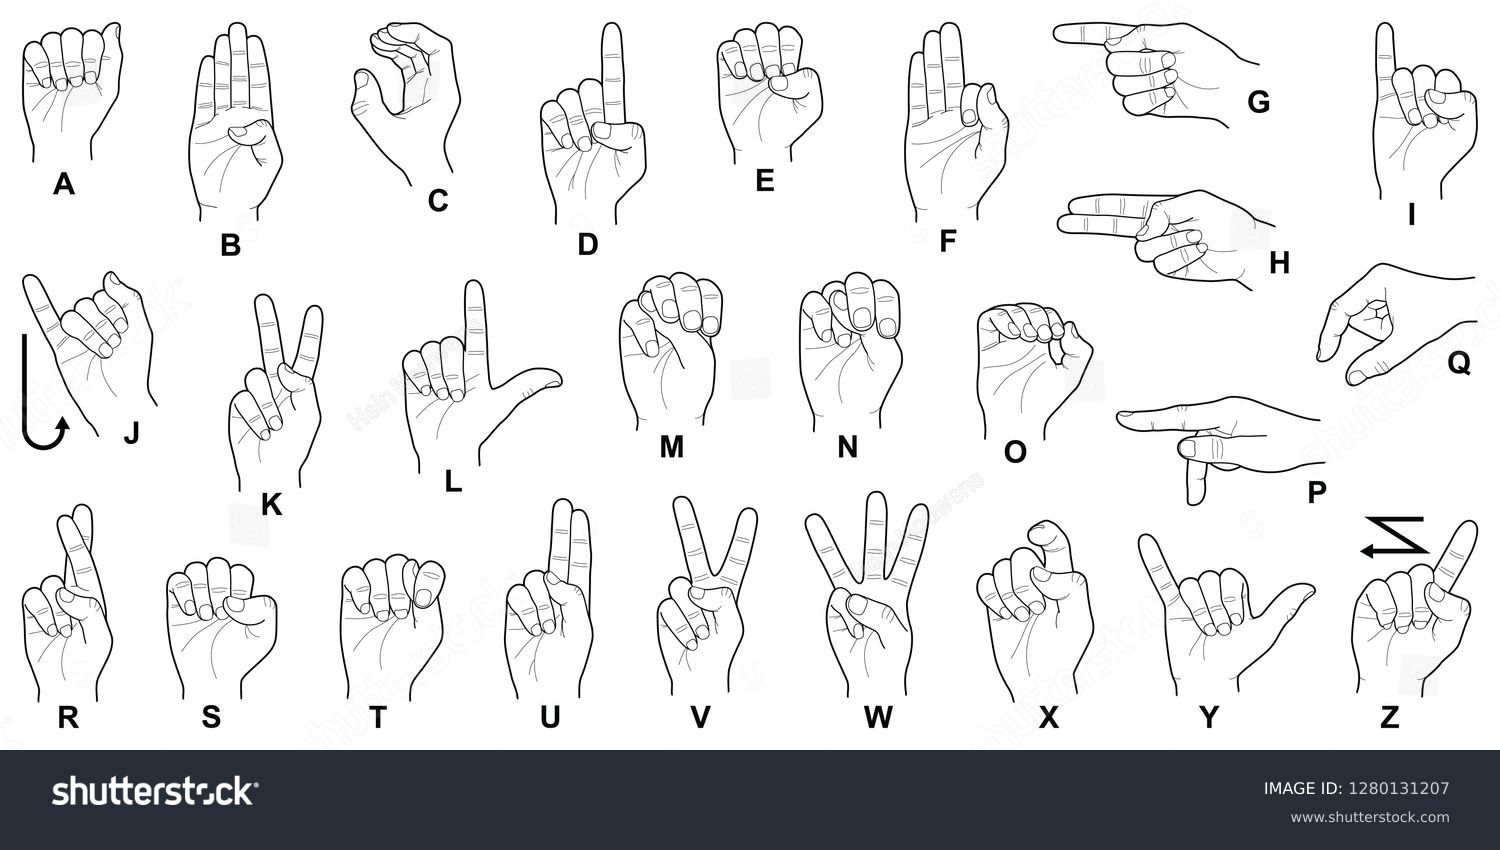 Язык жестов алфавит